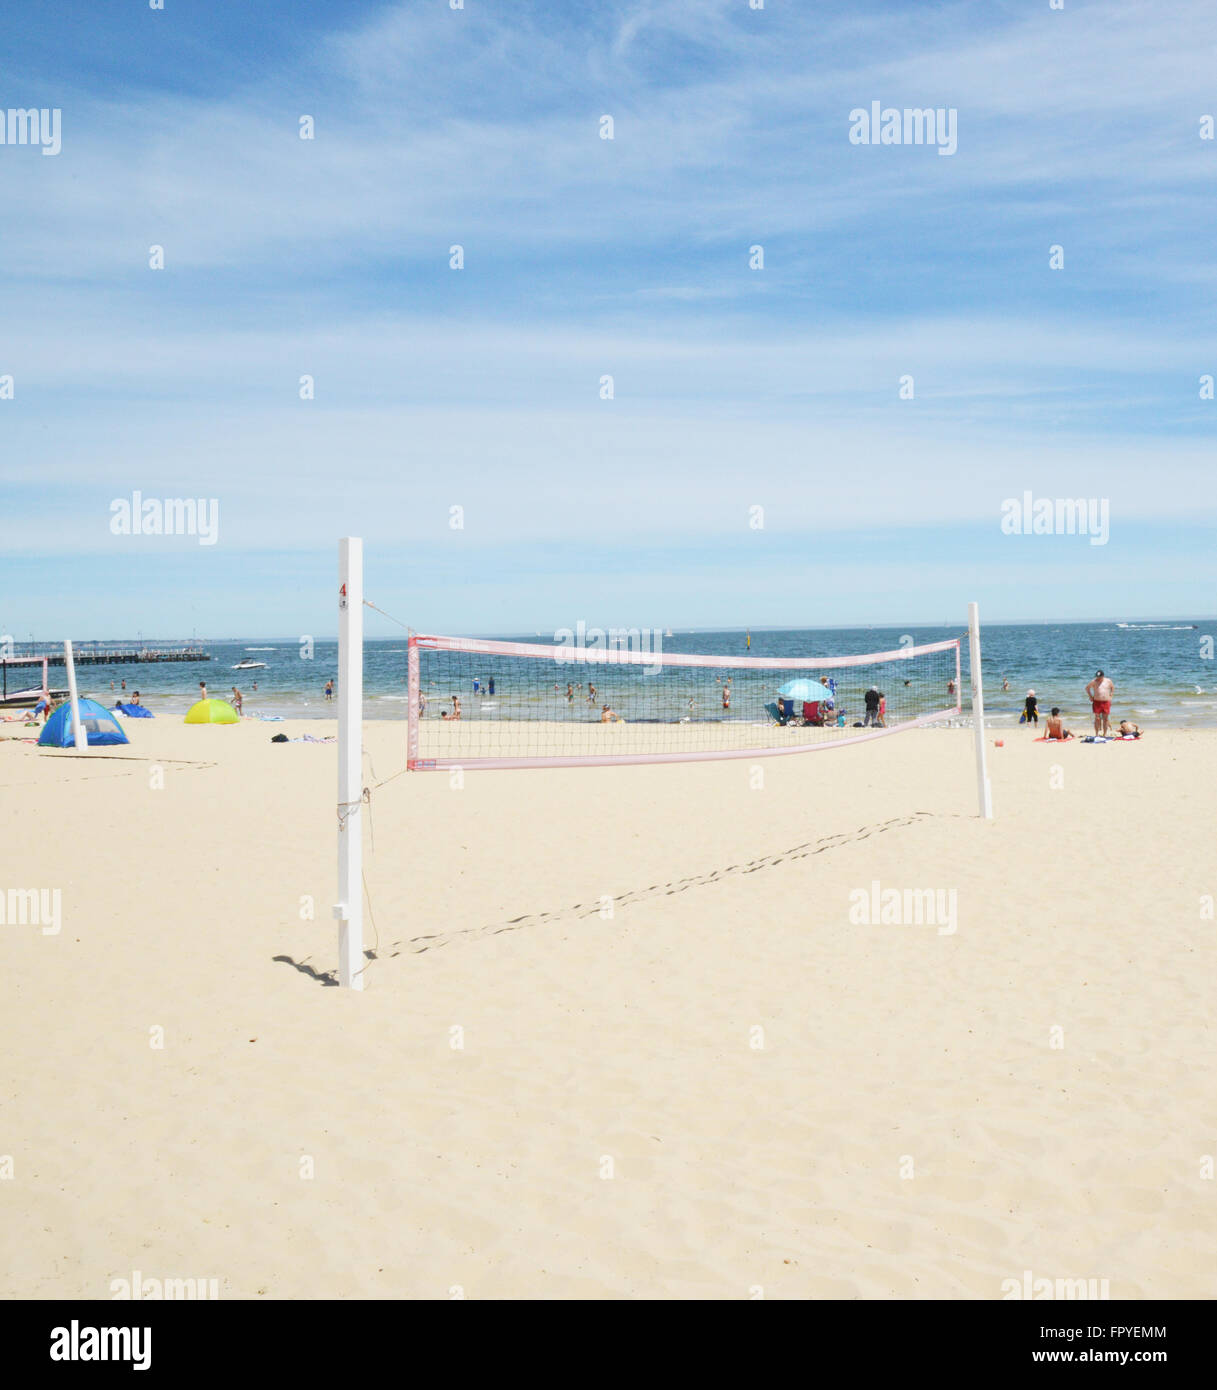 Beach Scene showing volley ball nets Stock Photo